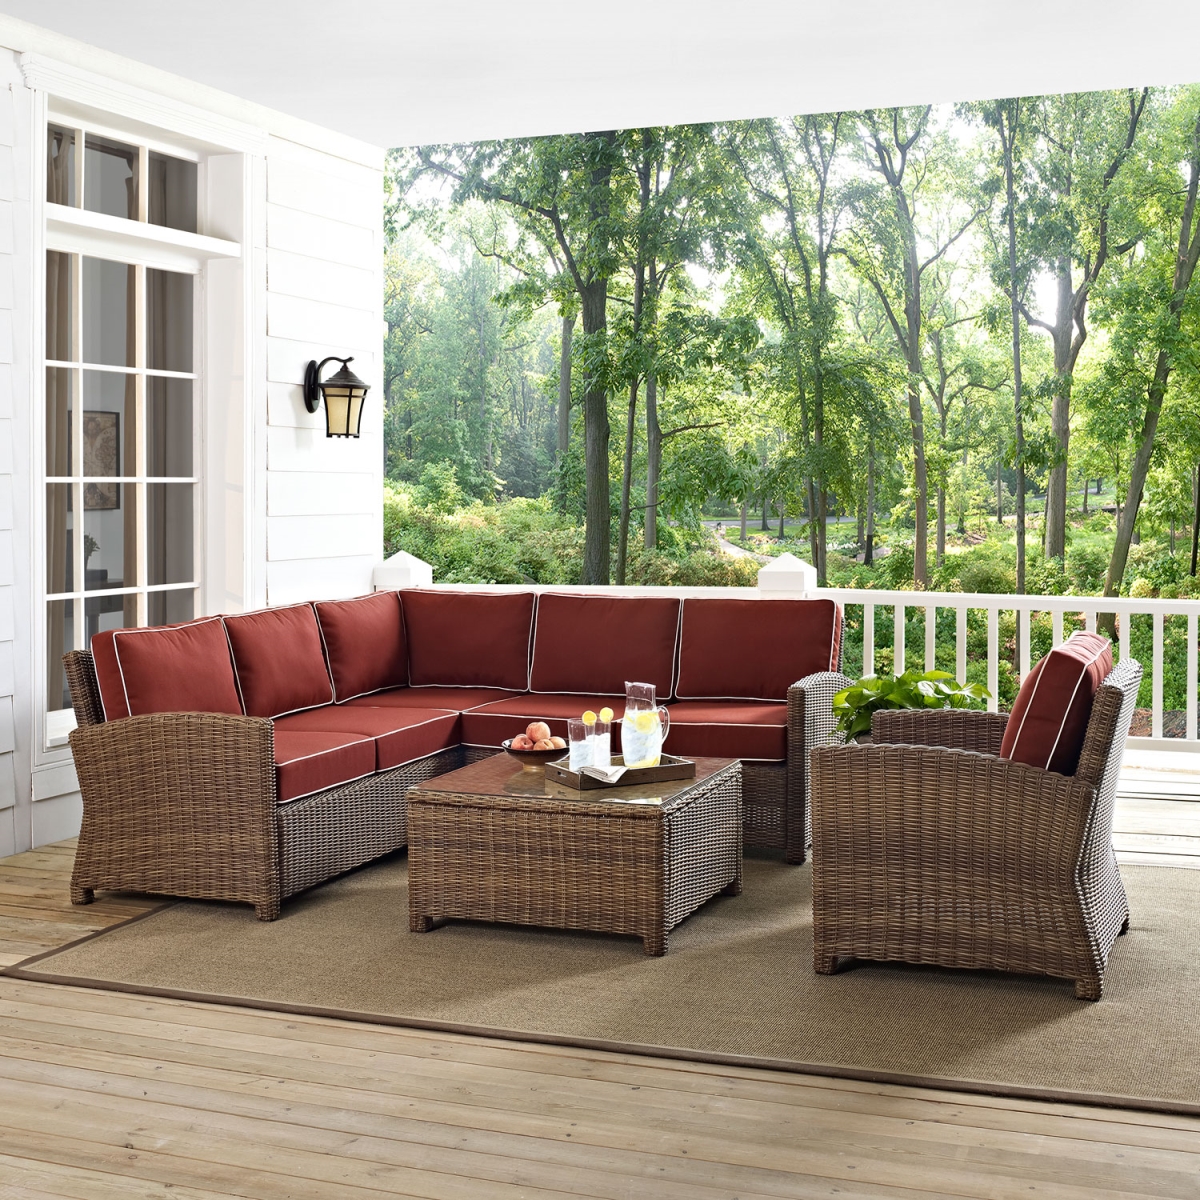 Ko70158-sg 5 Piece Bradenton Outdoor Wicker Seating Set With Sangria Cushions - Weathered Brown